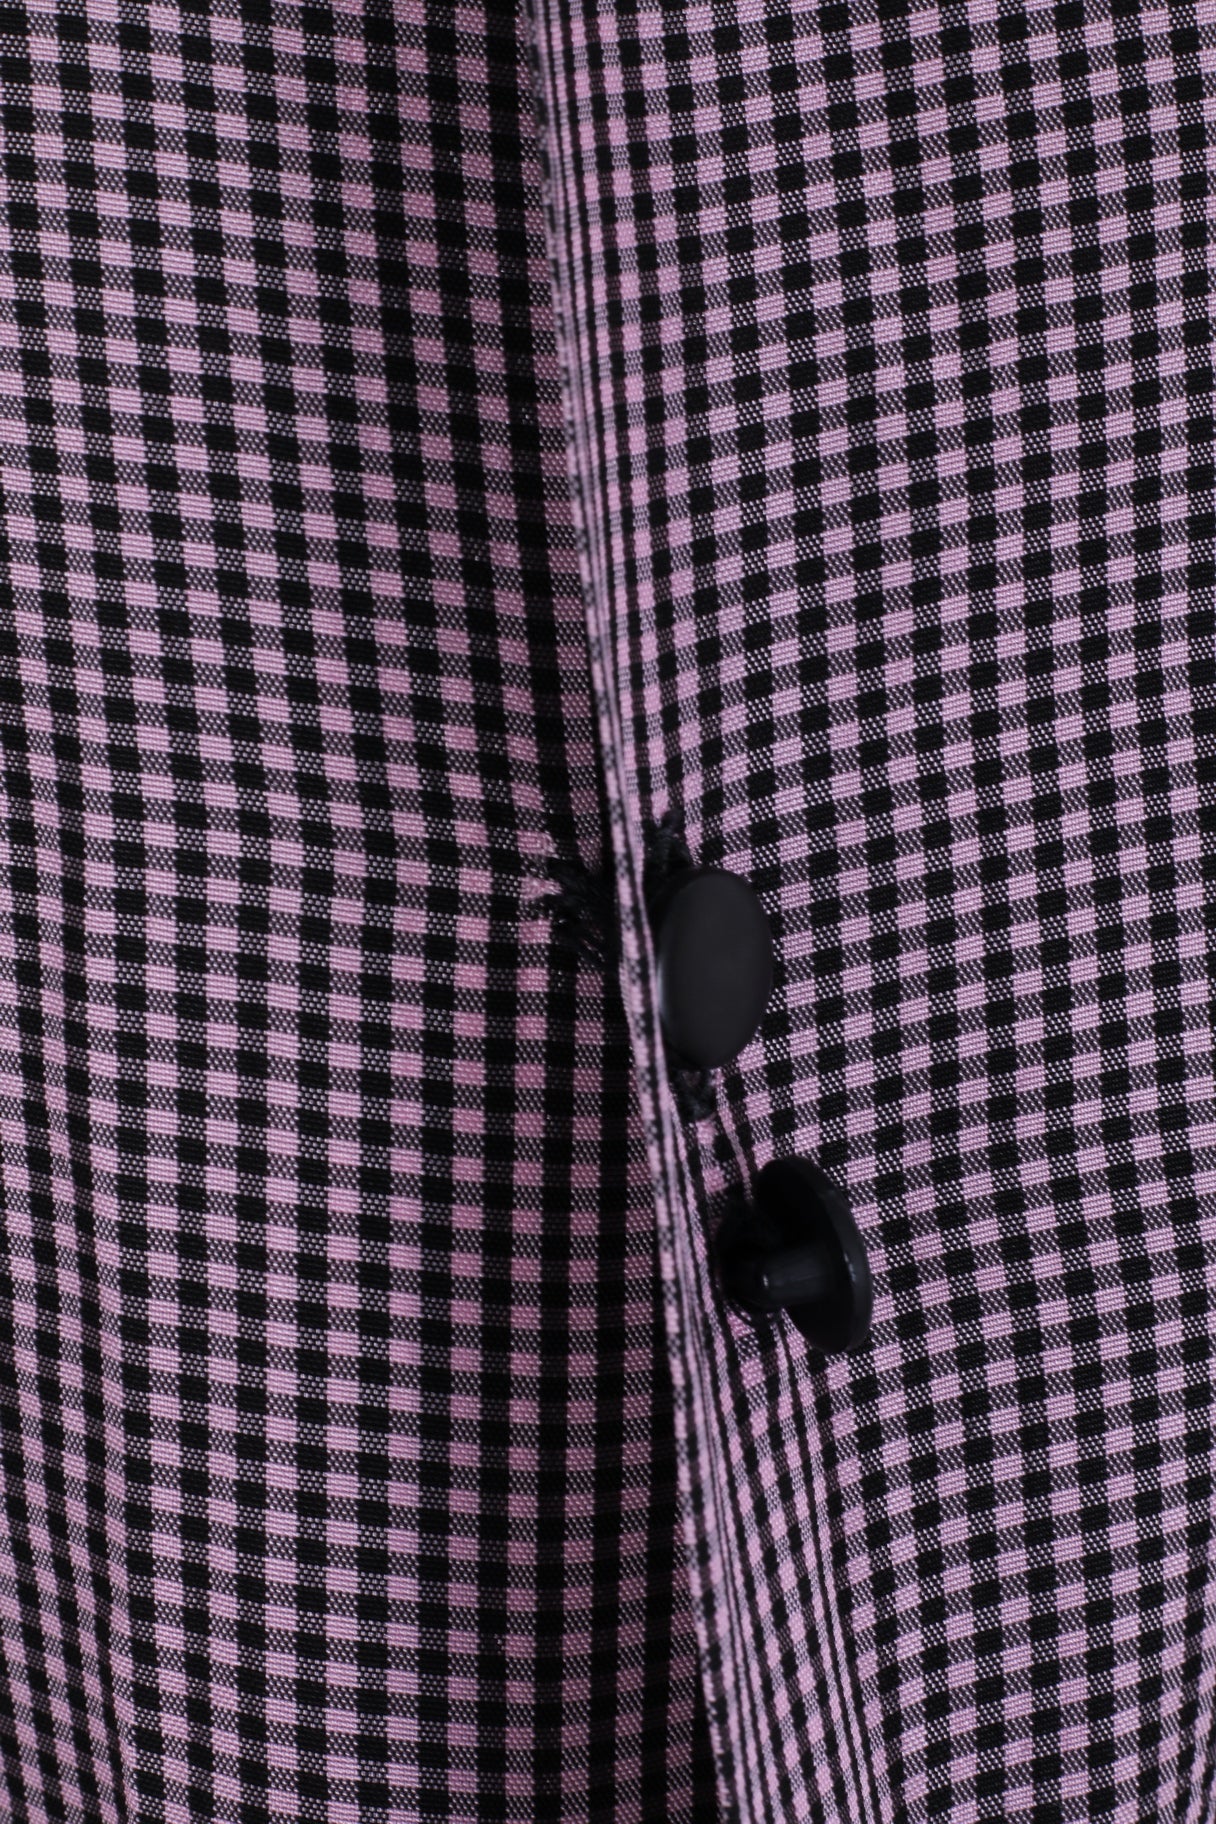 KAYAK Mens M Casual Shirt Purple Checkered Long Sleeve Modern